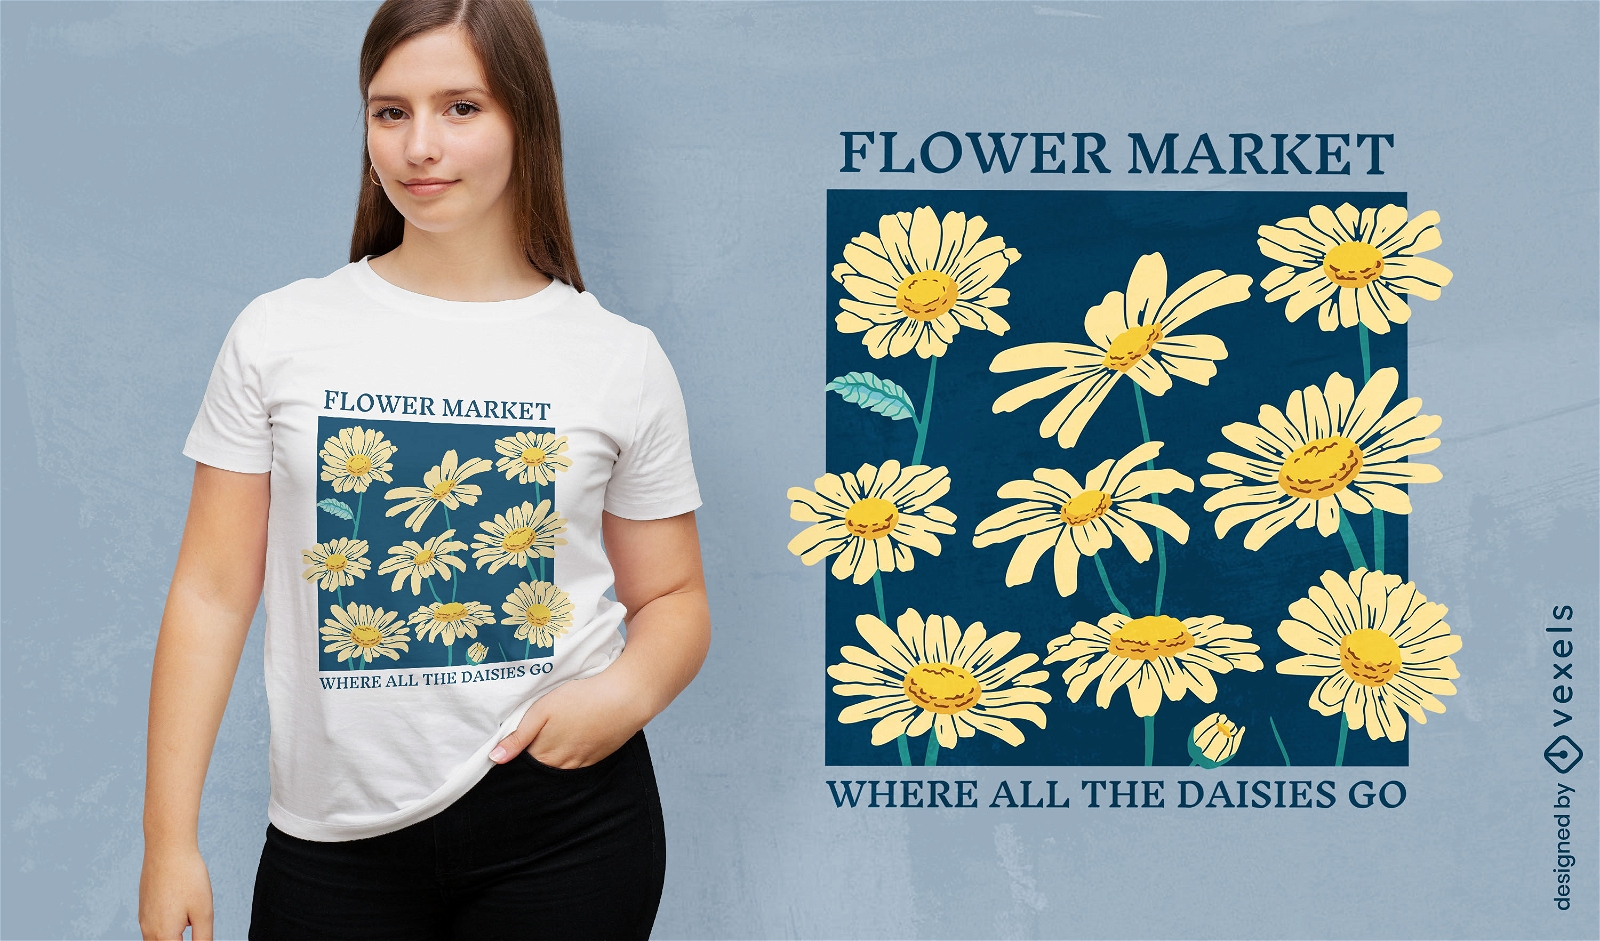 Flower market daisies t-shirt design